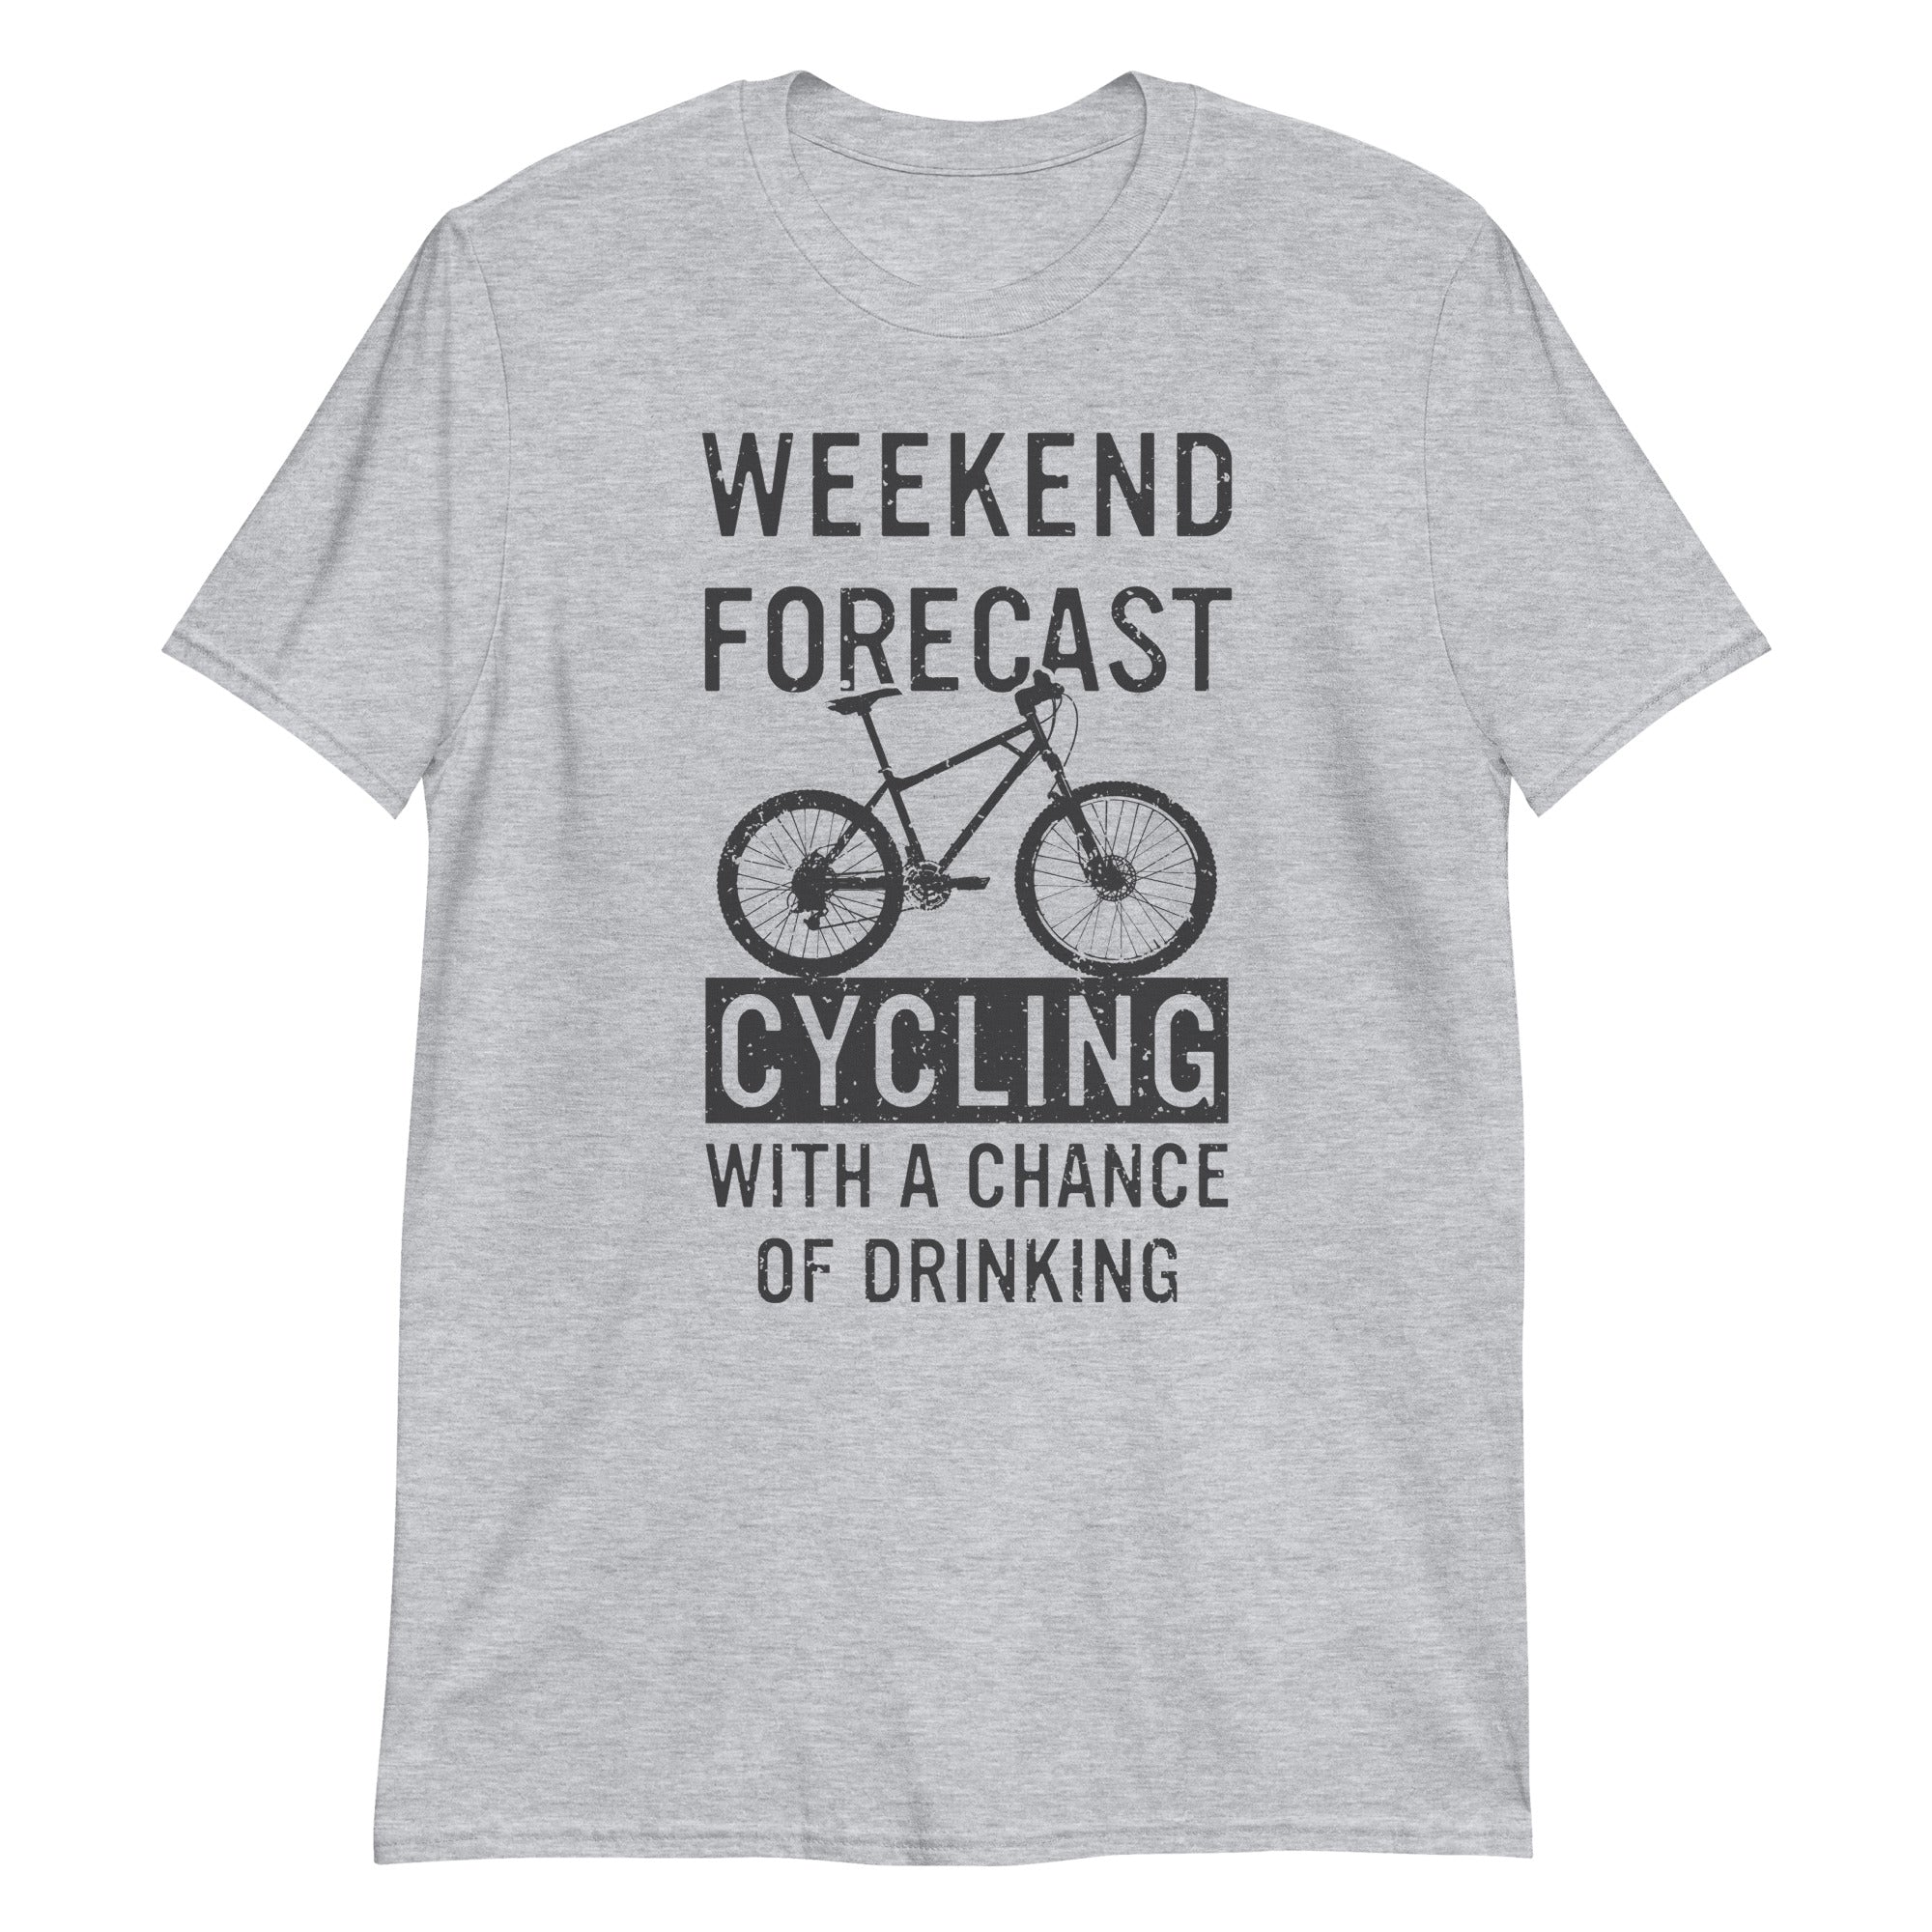 Weekend forecast